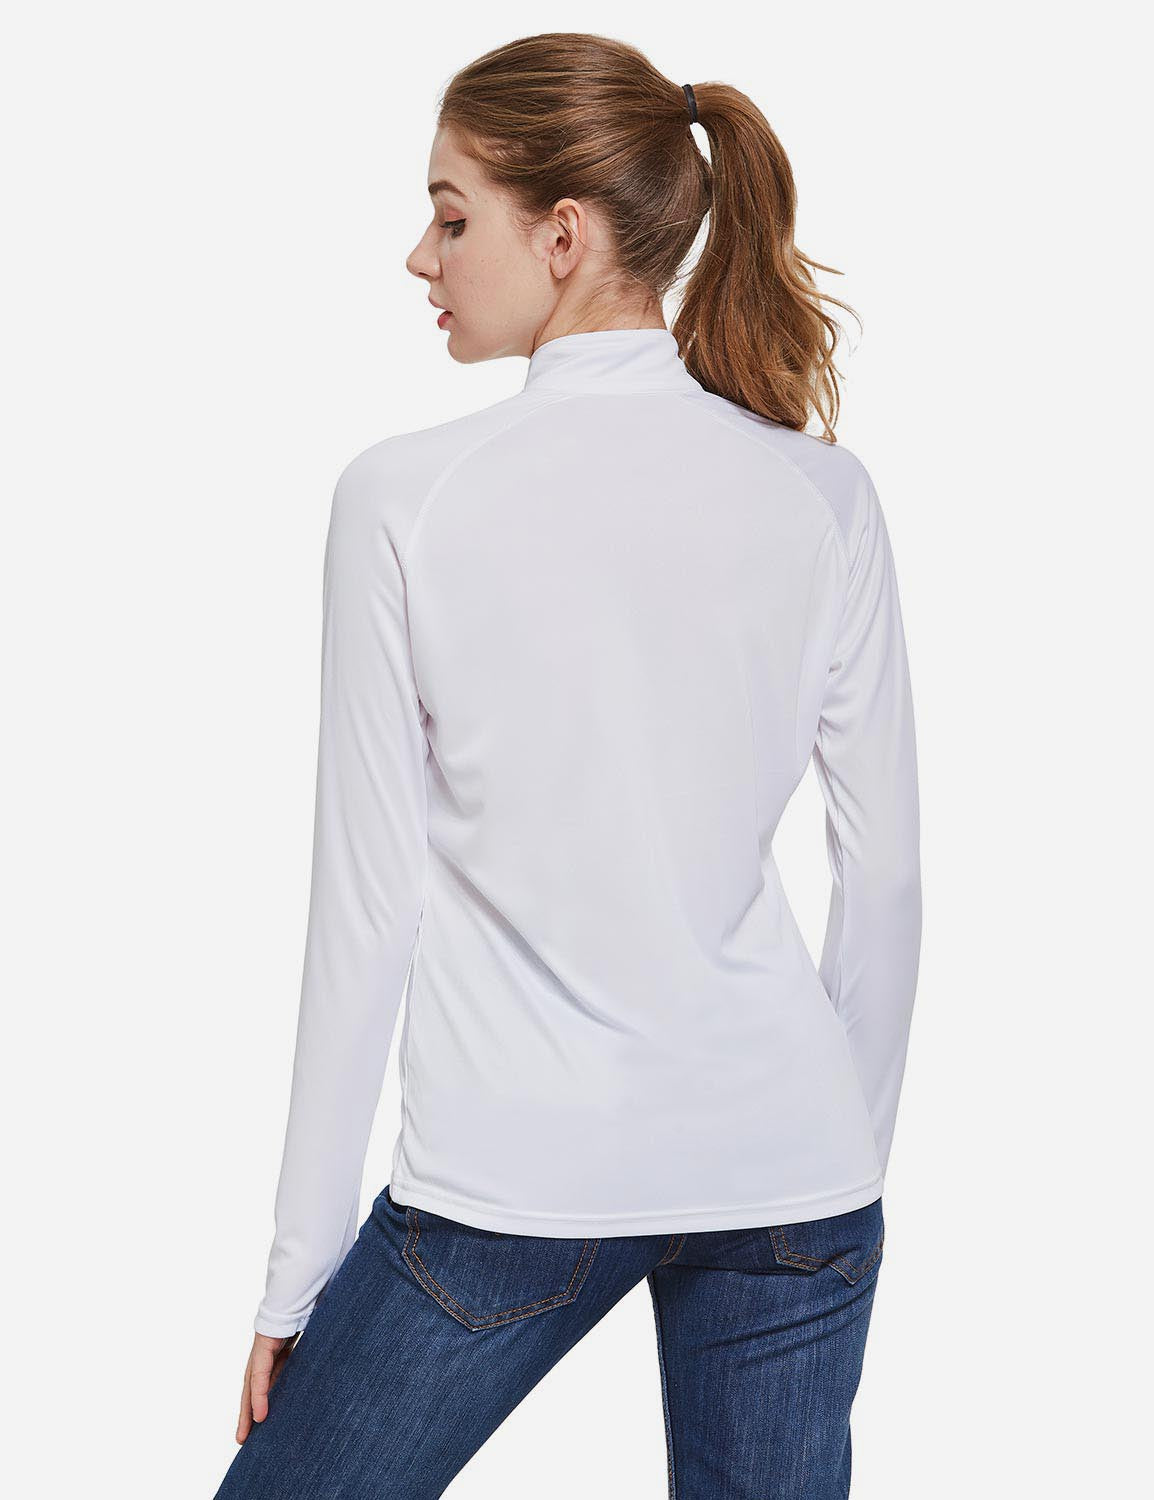 Baleaf Women's UP50+ Collared Long Sleeved Tshirt w Thumbholes aga065 White Back